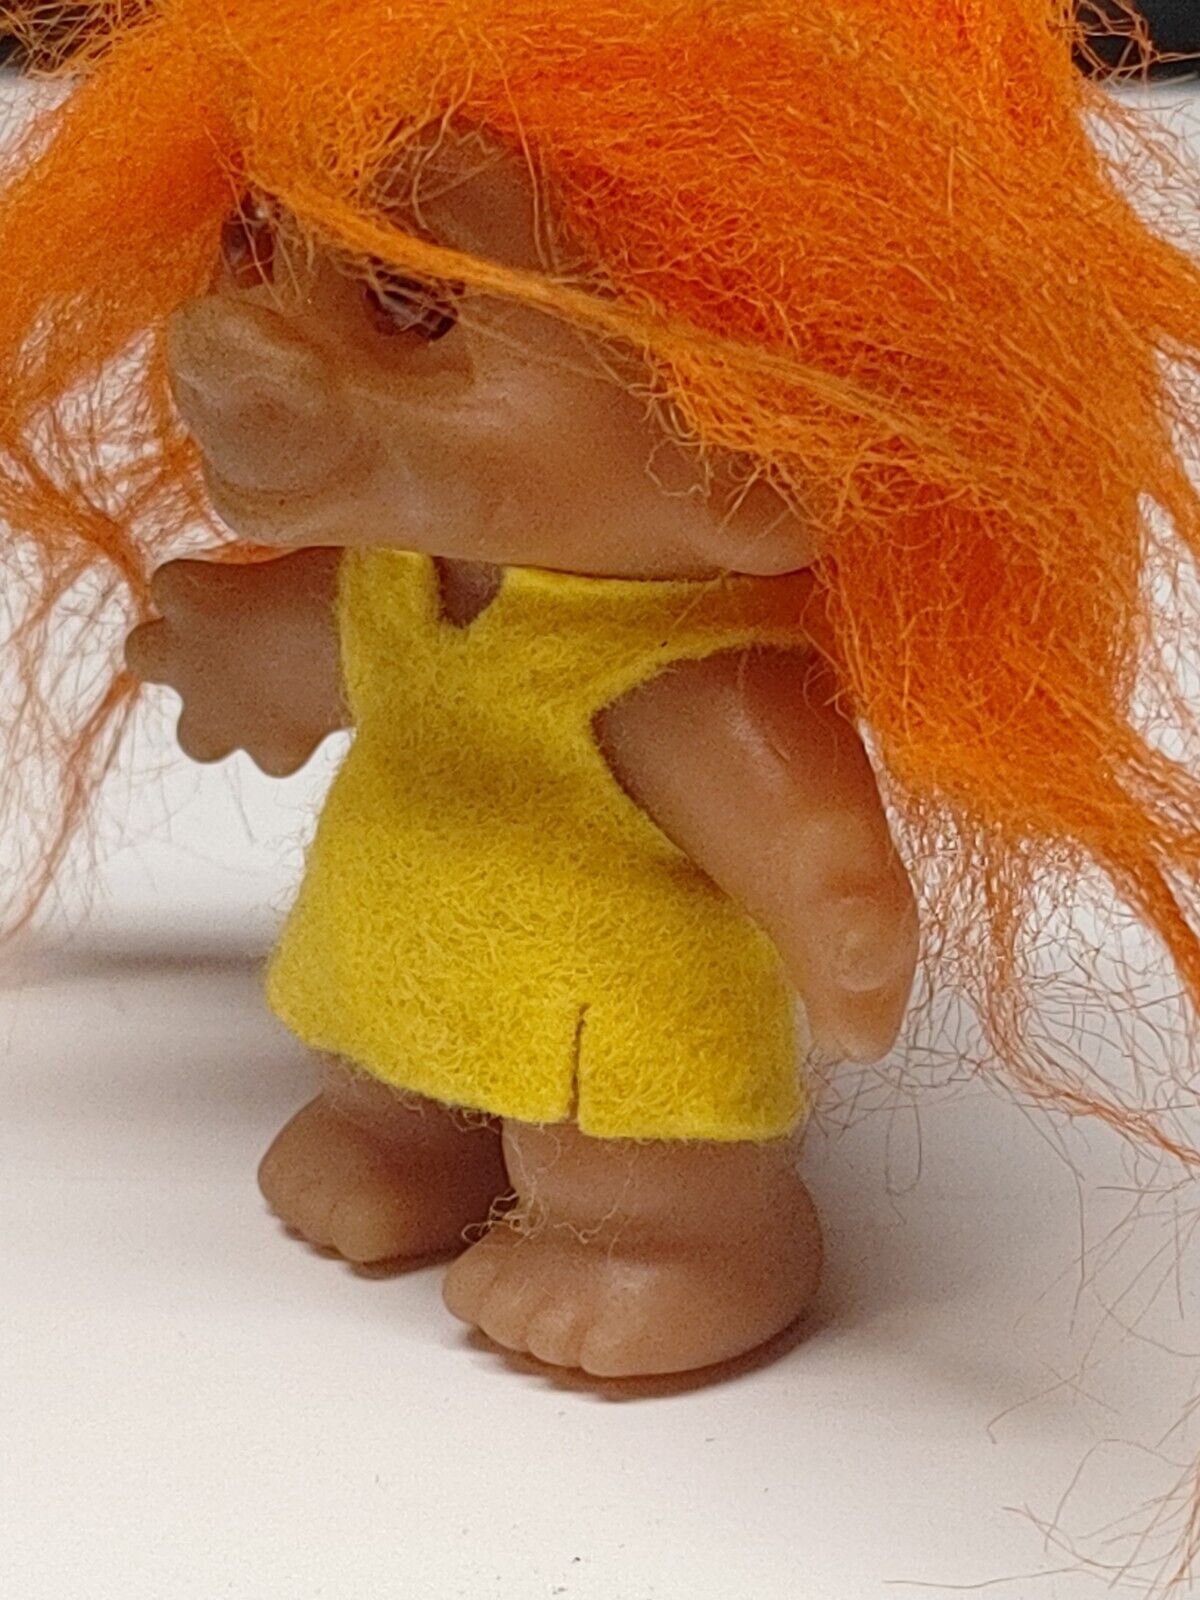 1965 DAM Things - Troll Doll w/ Orange Hair - Yellow Clothes 3" - All Orignal